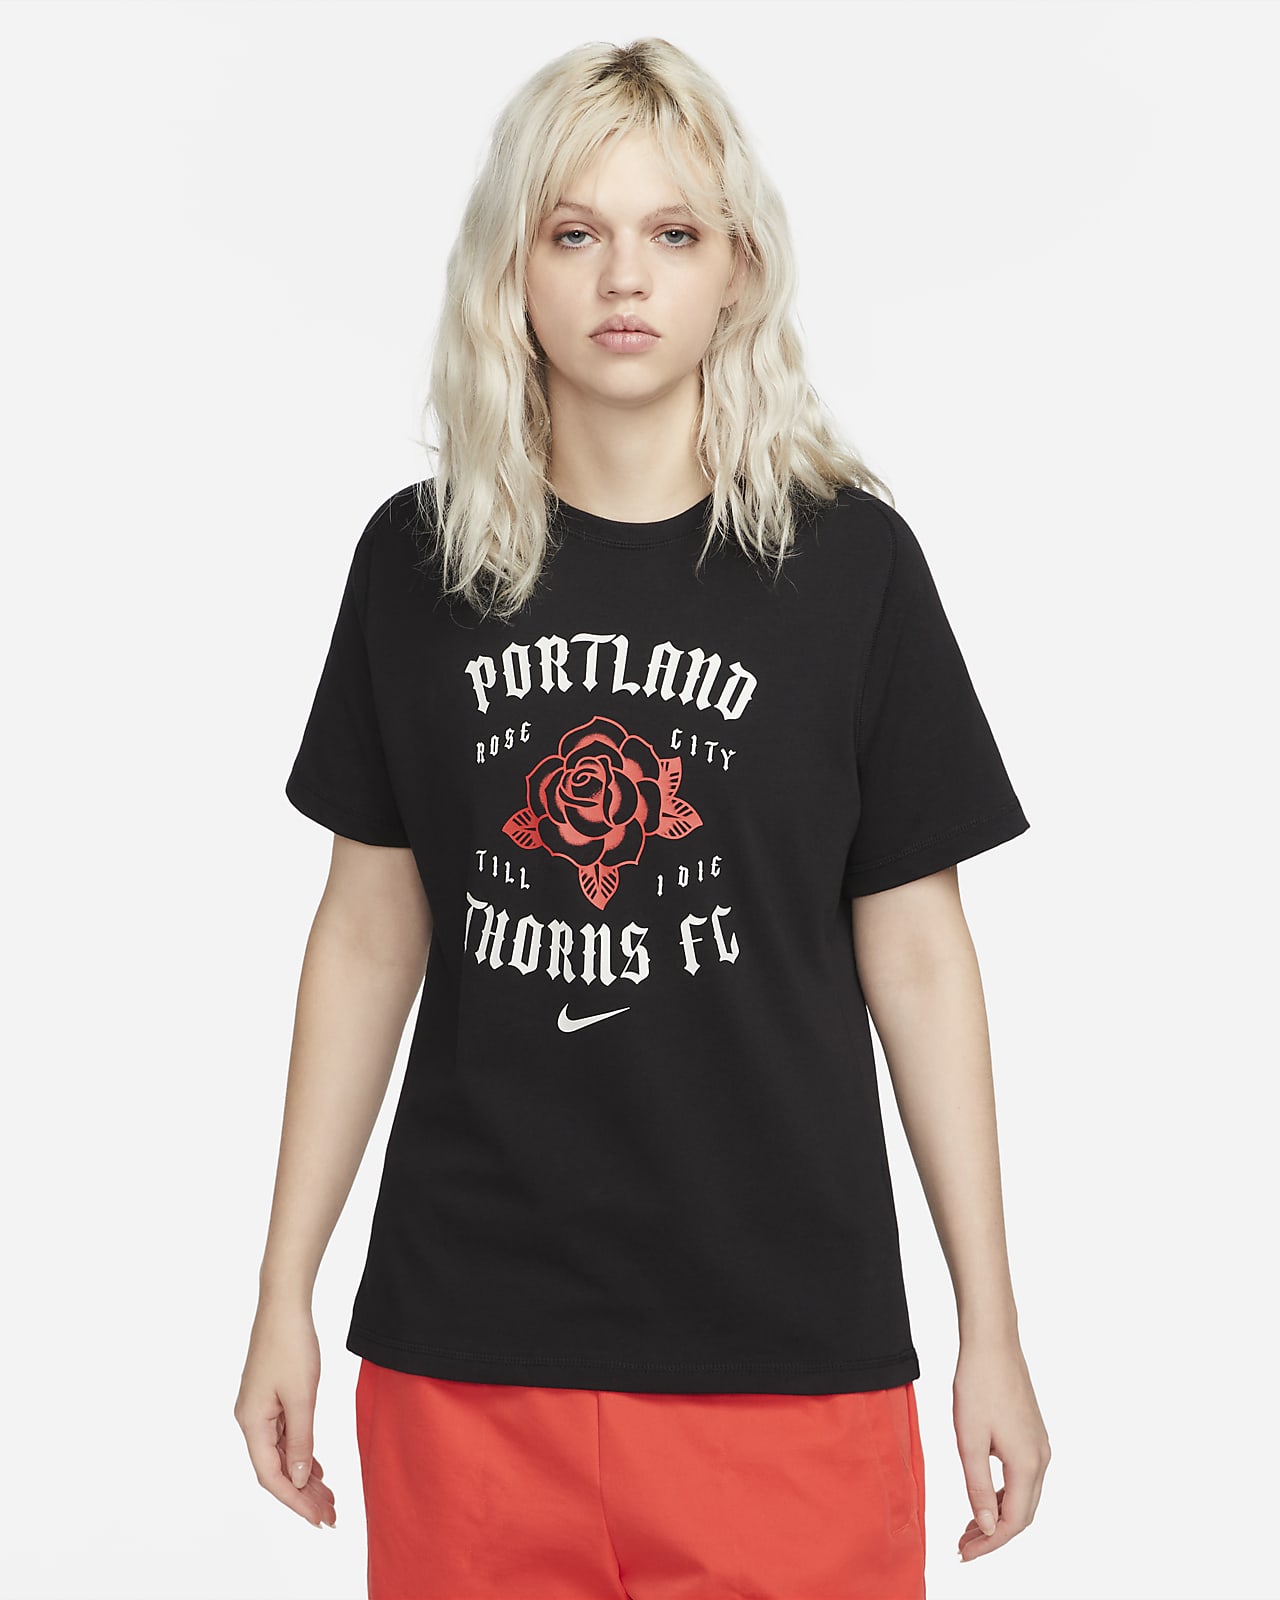 Portland Thorns FC Travel Women's Nike Soccer Top